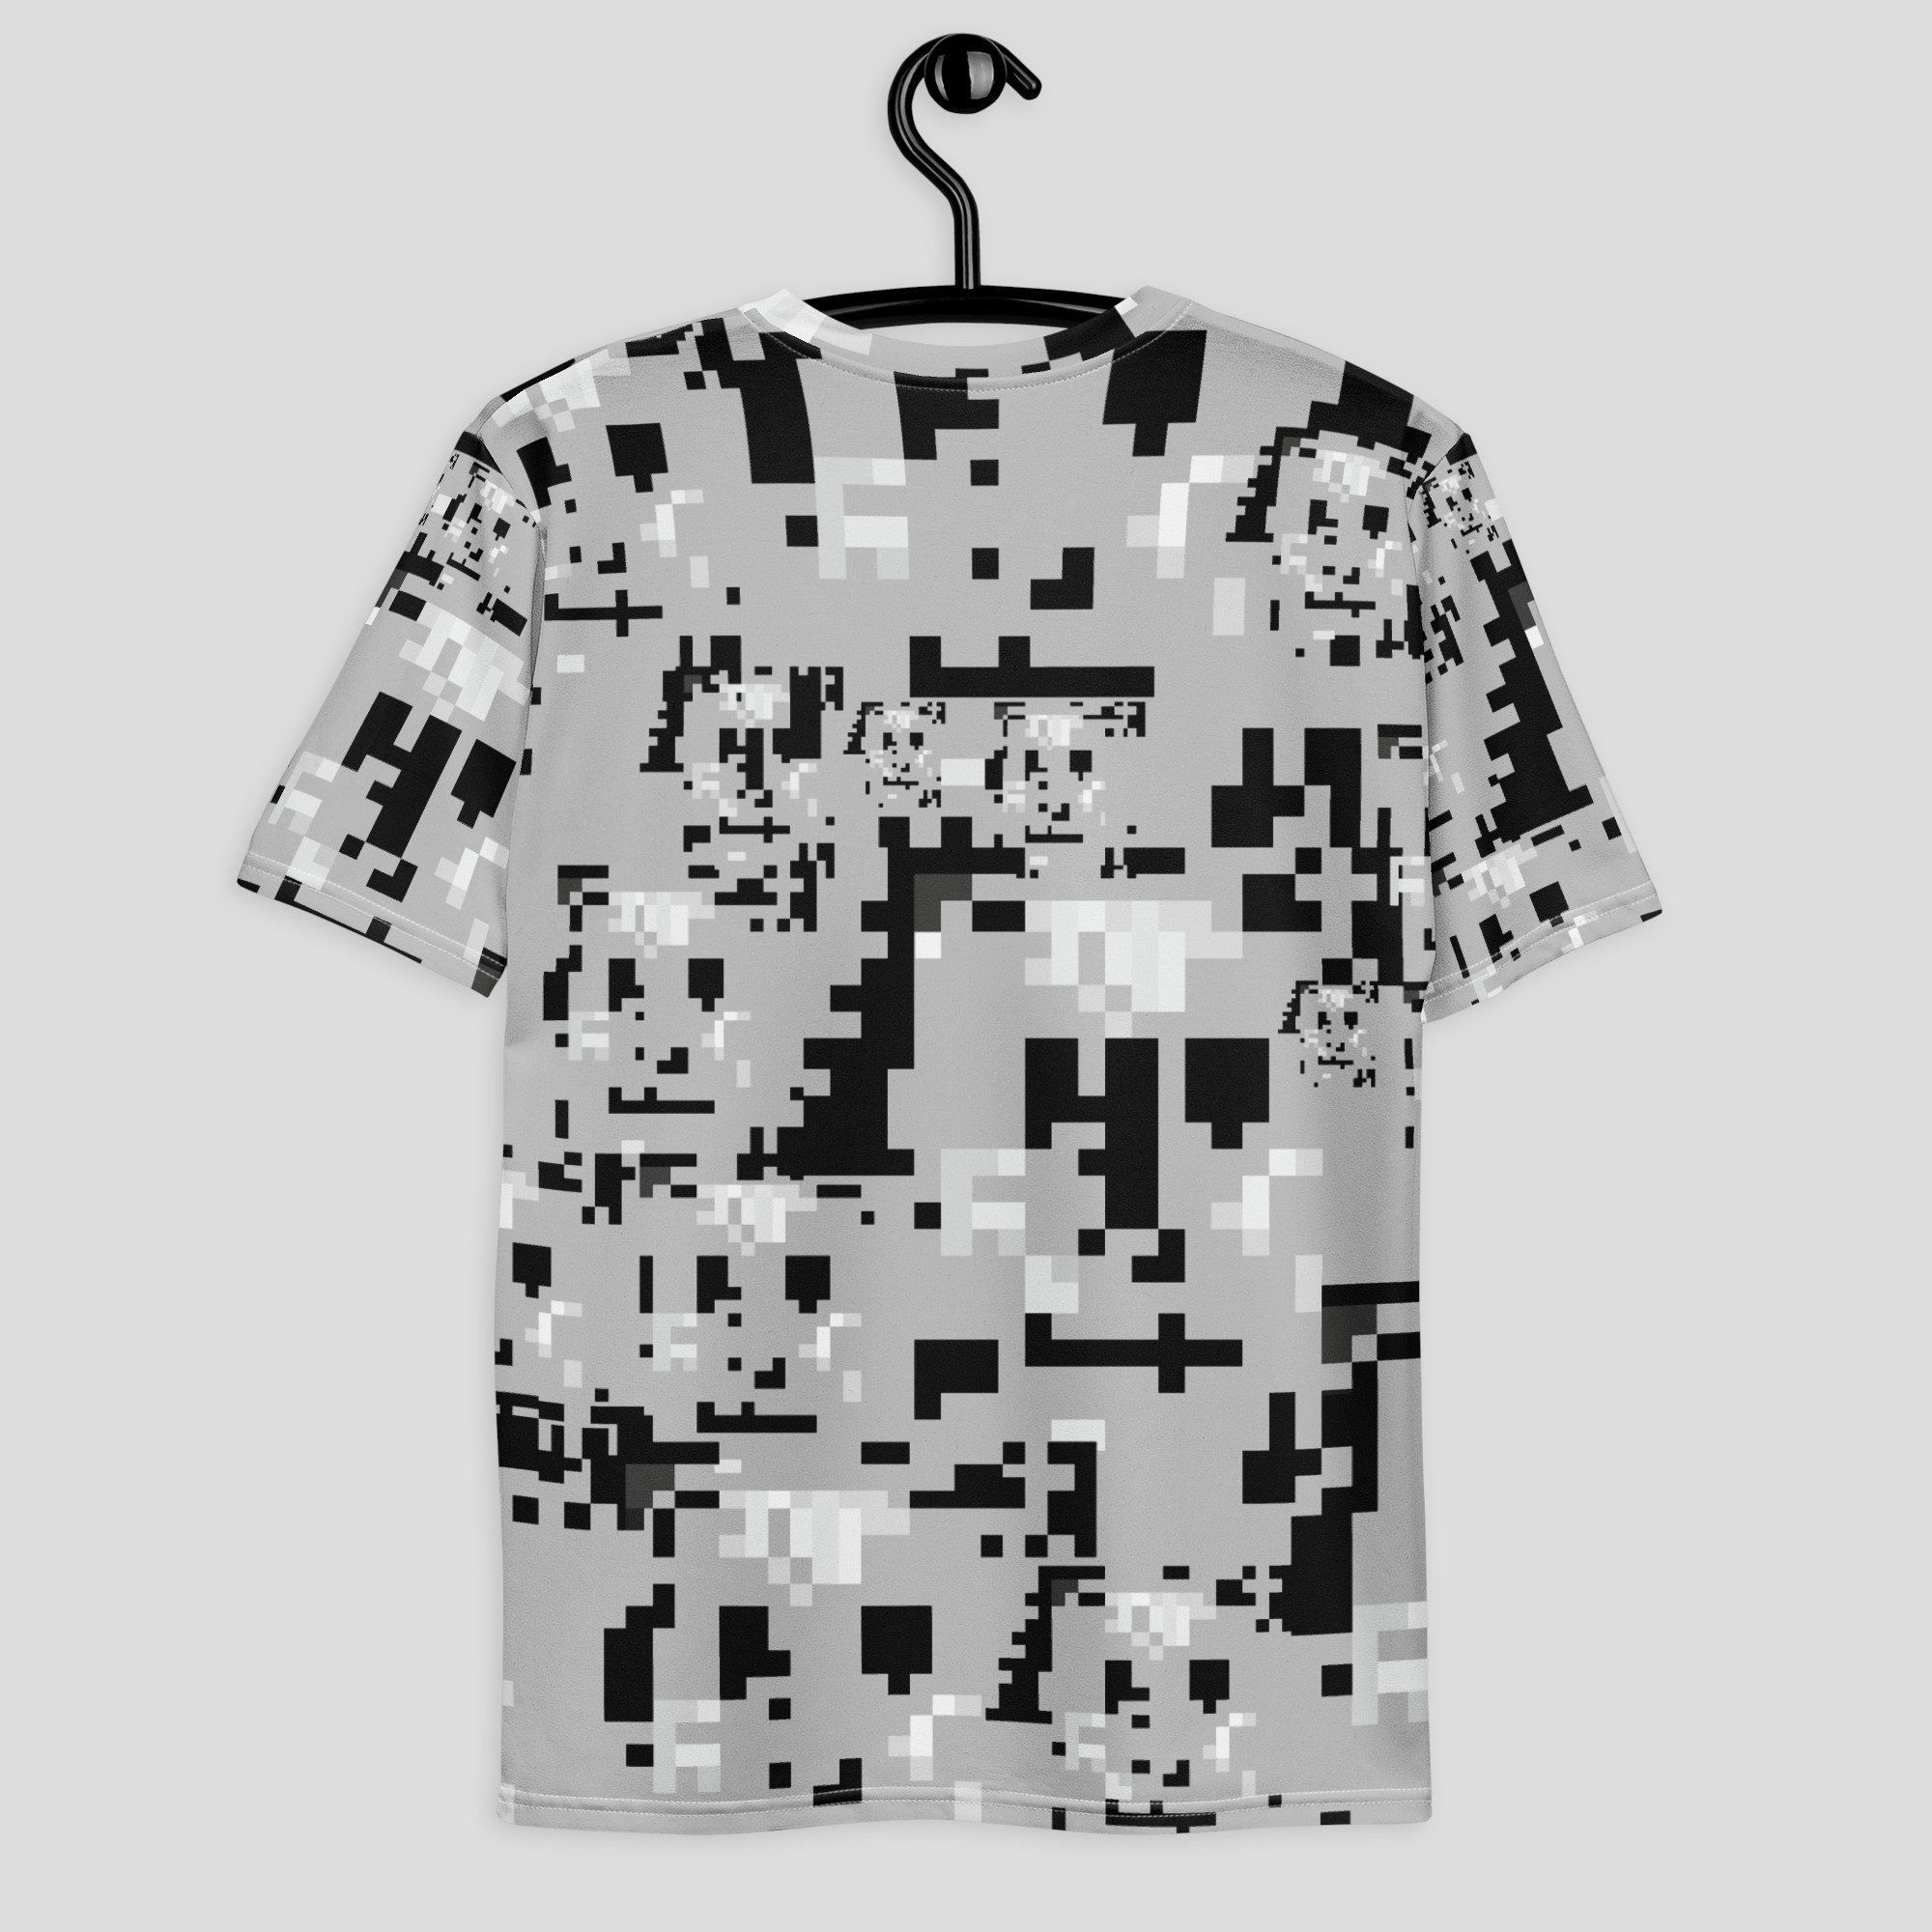 LV Camo Jacquard T-Shirt M